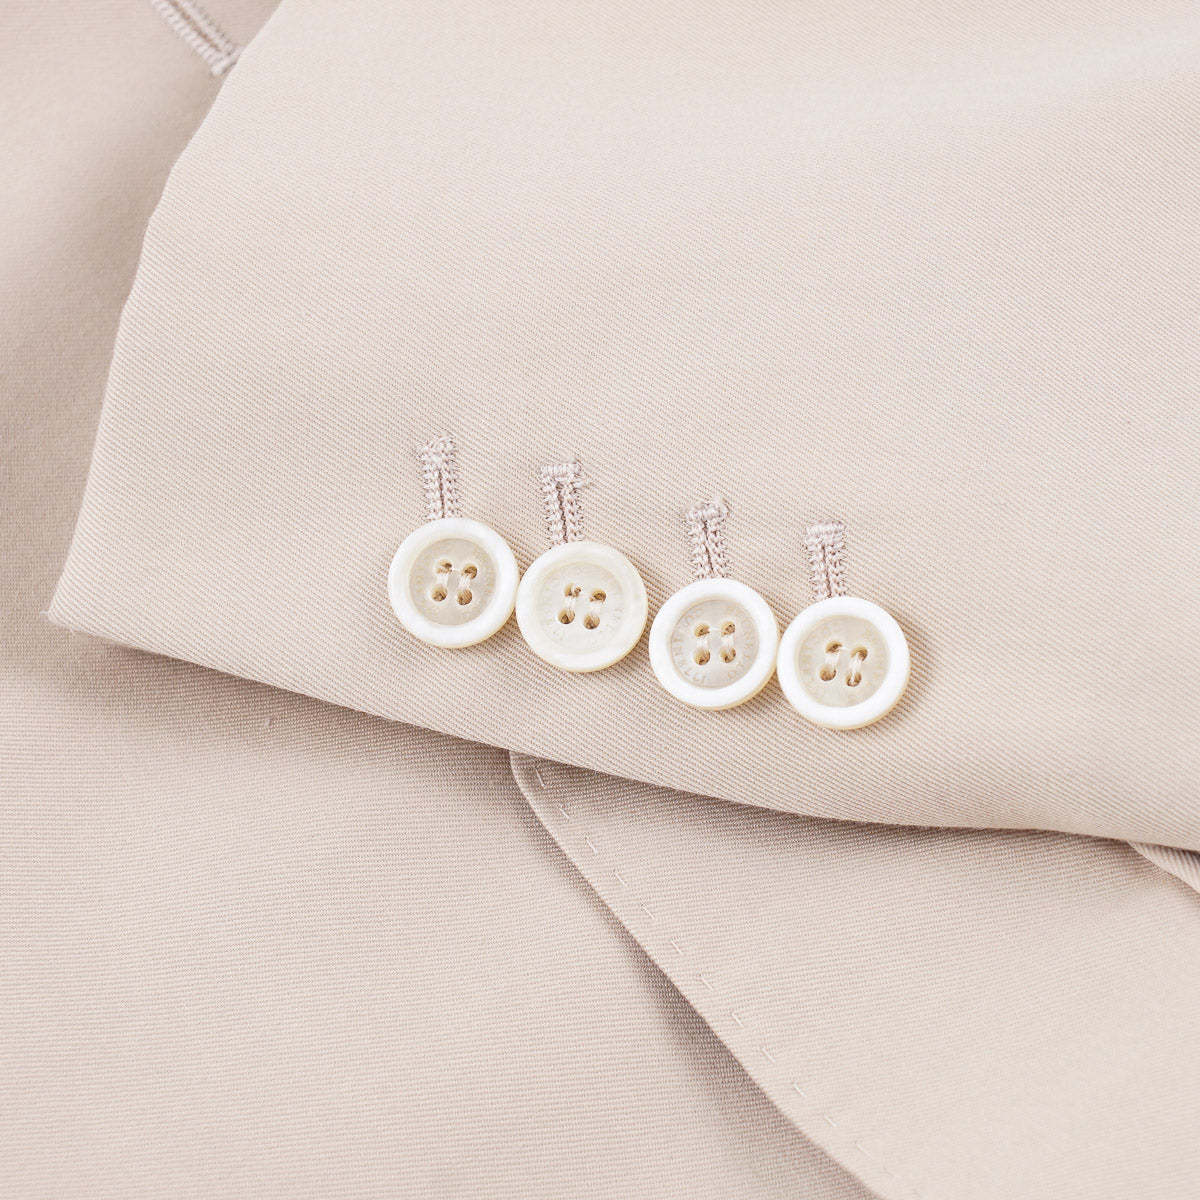 Brunello Cucinelli Wool and Cotton Suit - Top Shelf Apparel